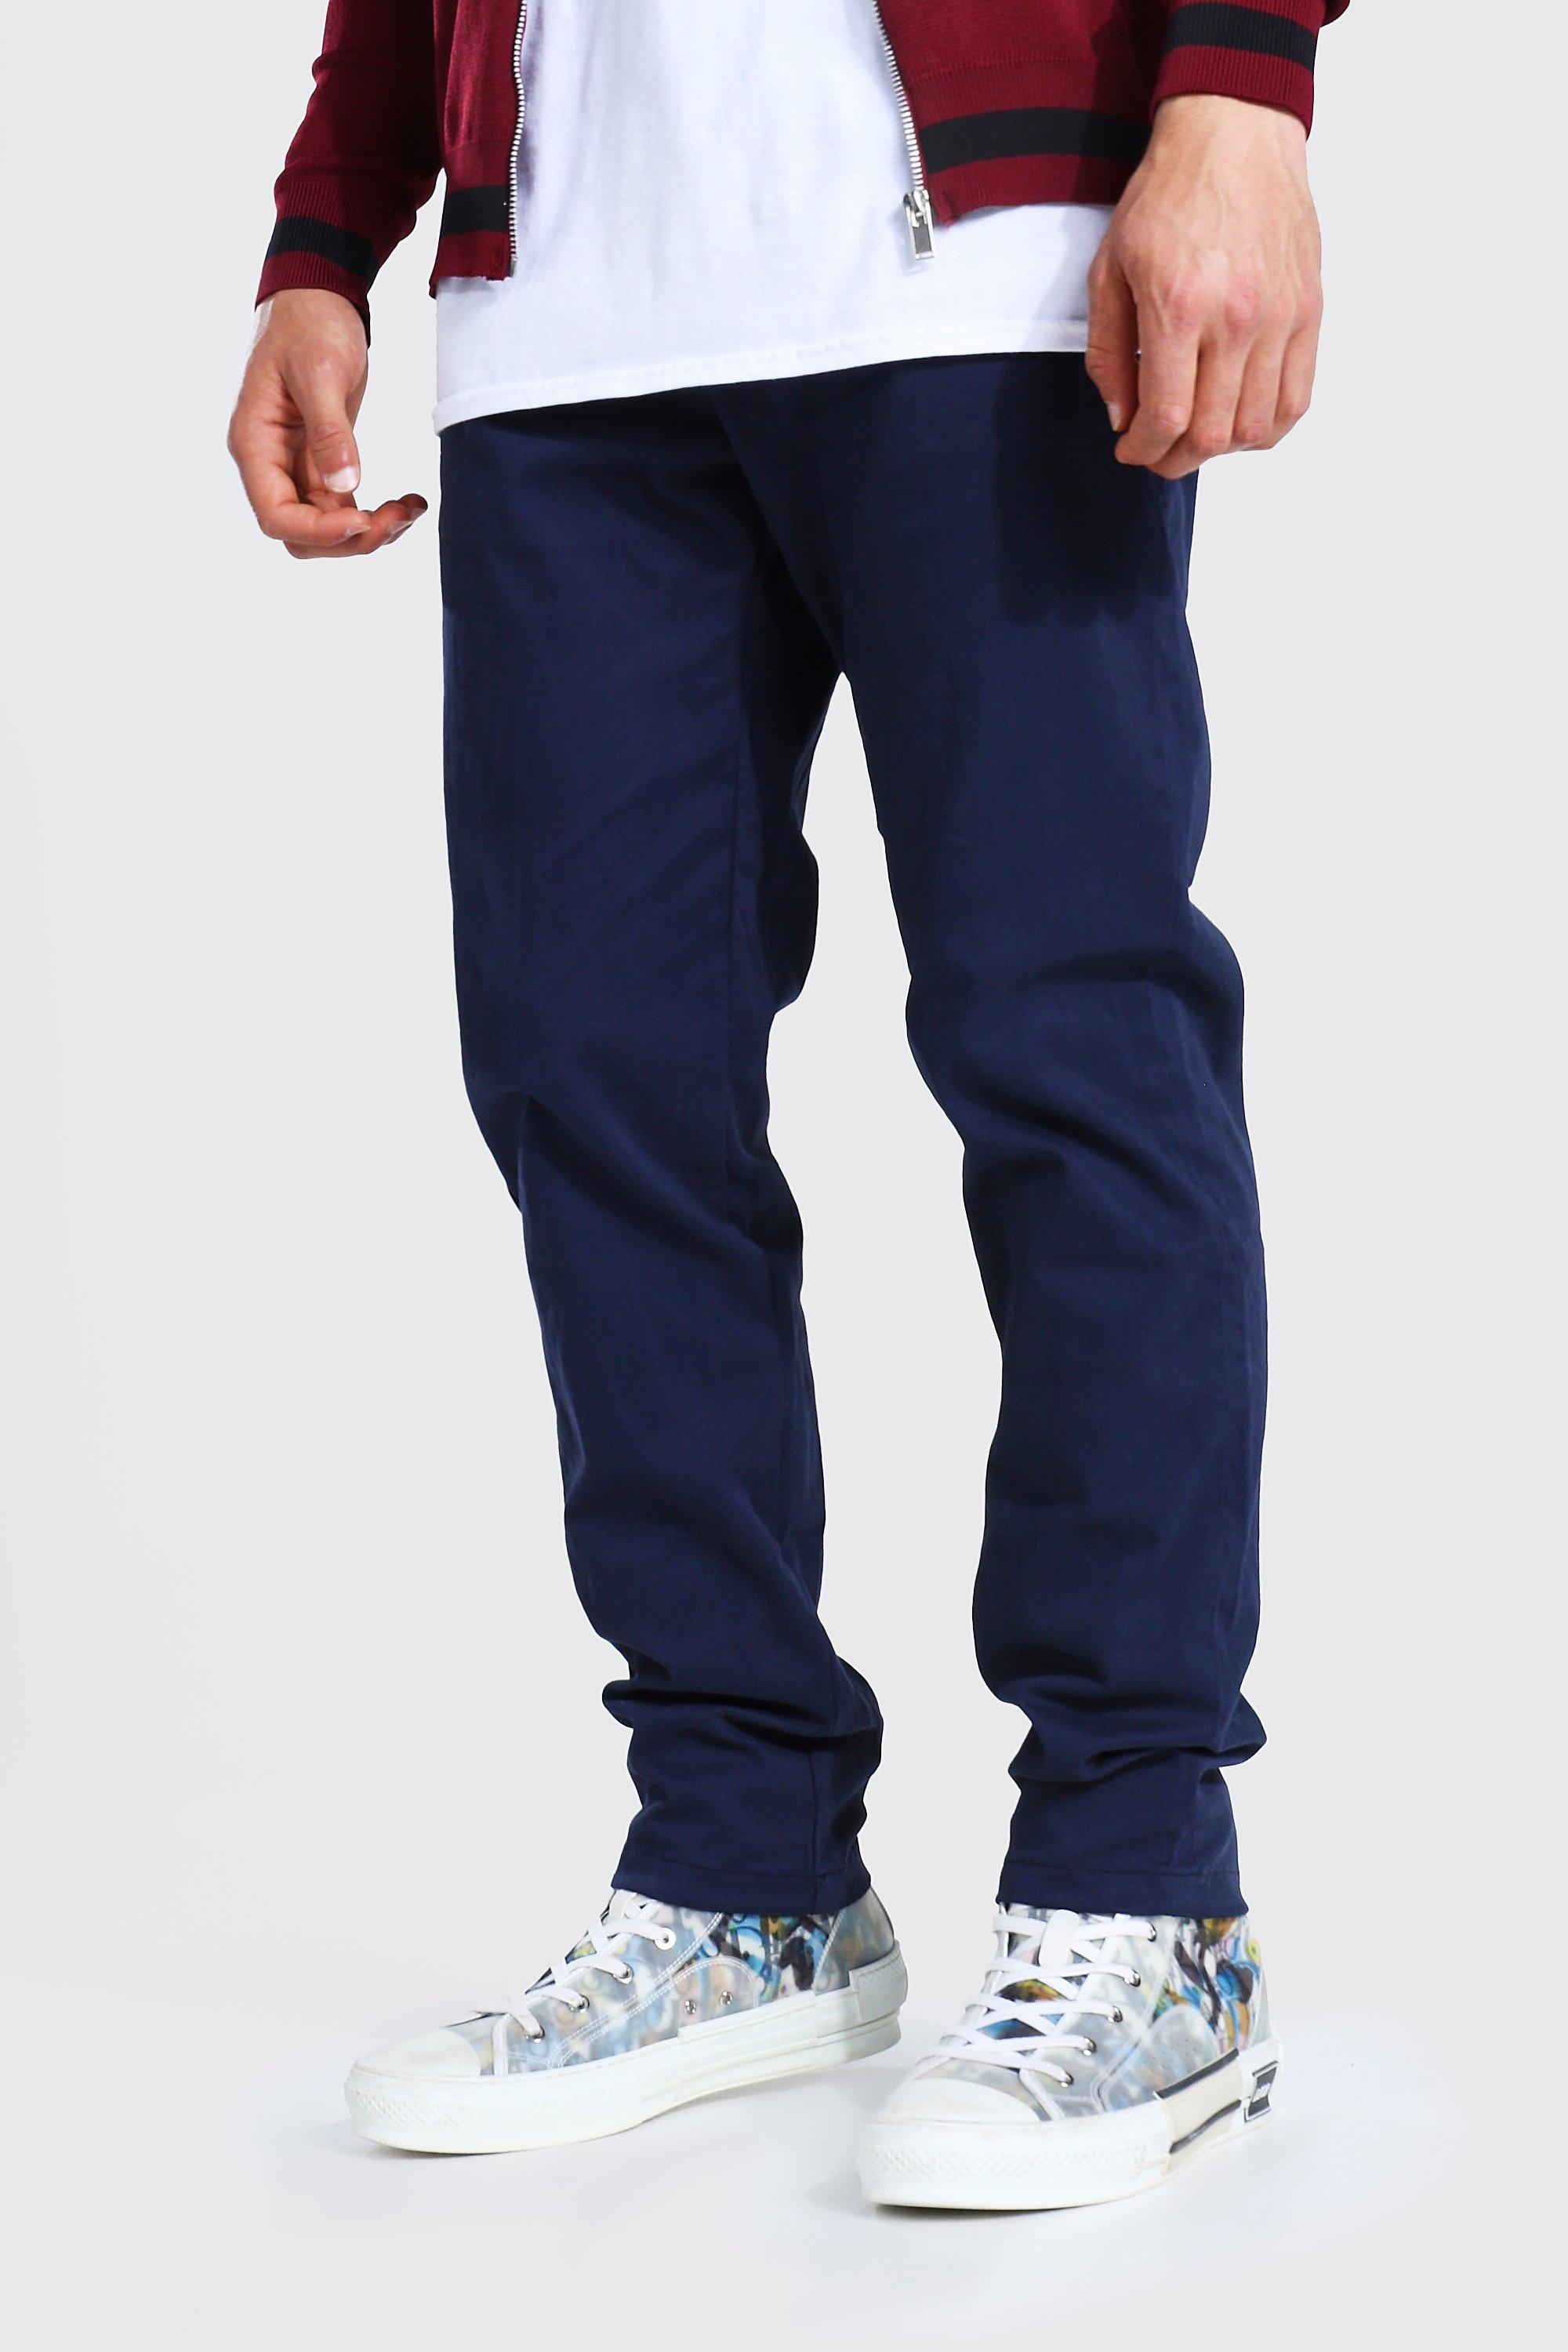 pantalon chino skinny homme - bleu - 28, bleu